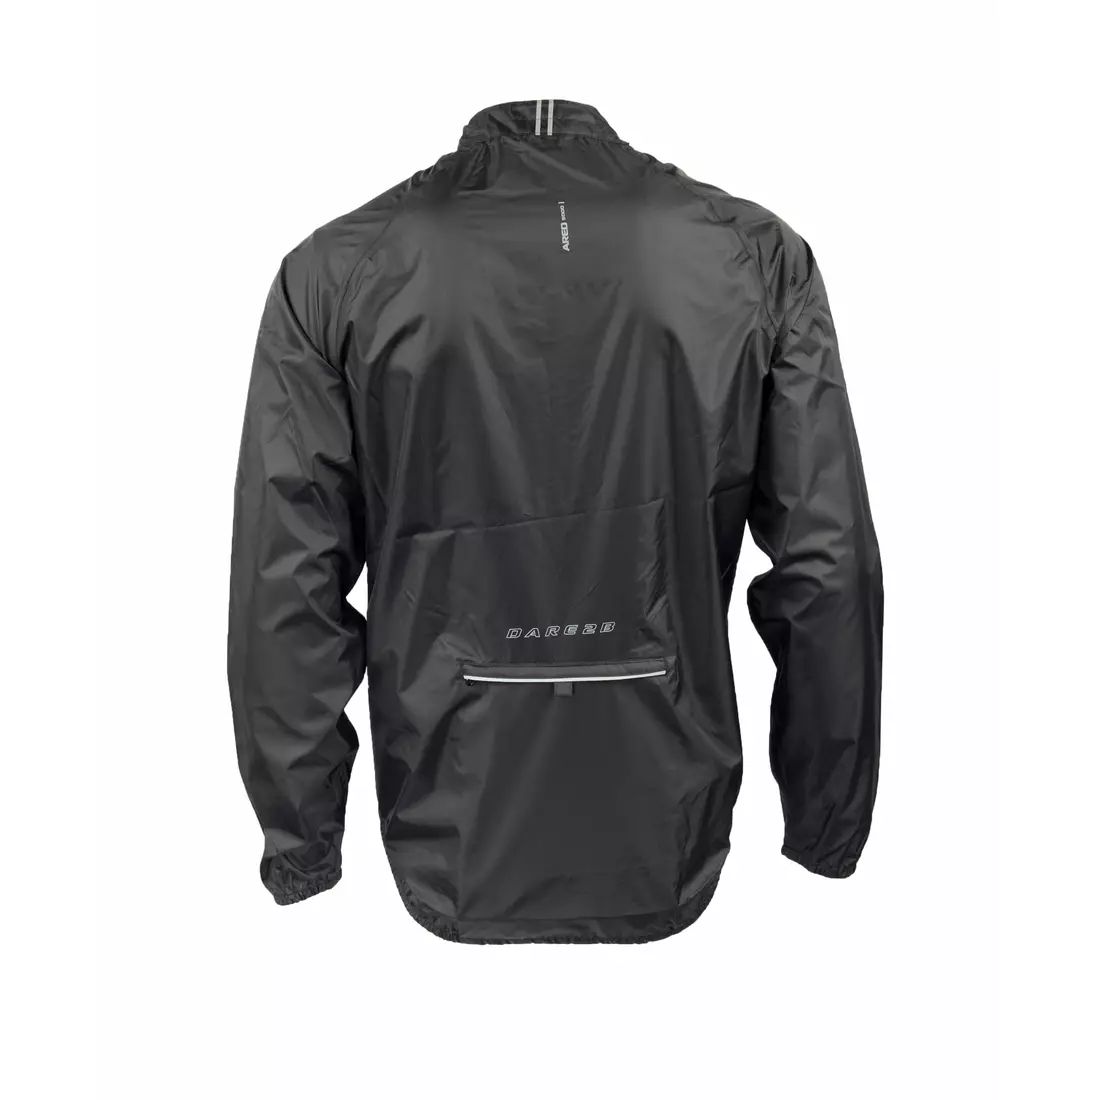 DARE2B AFFUSION JACKET - lehká cyklistická bunda odolná proti dešti, černá DMW096-800